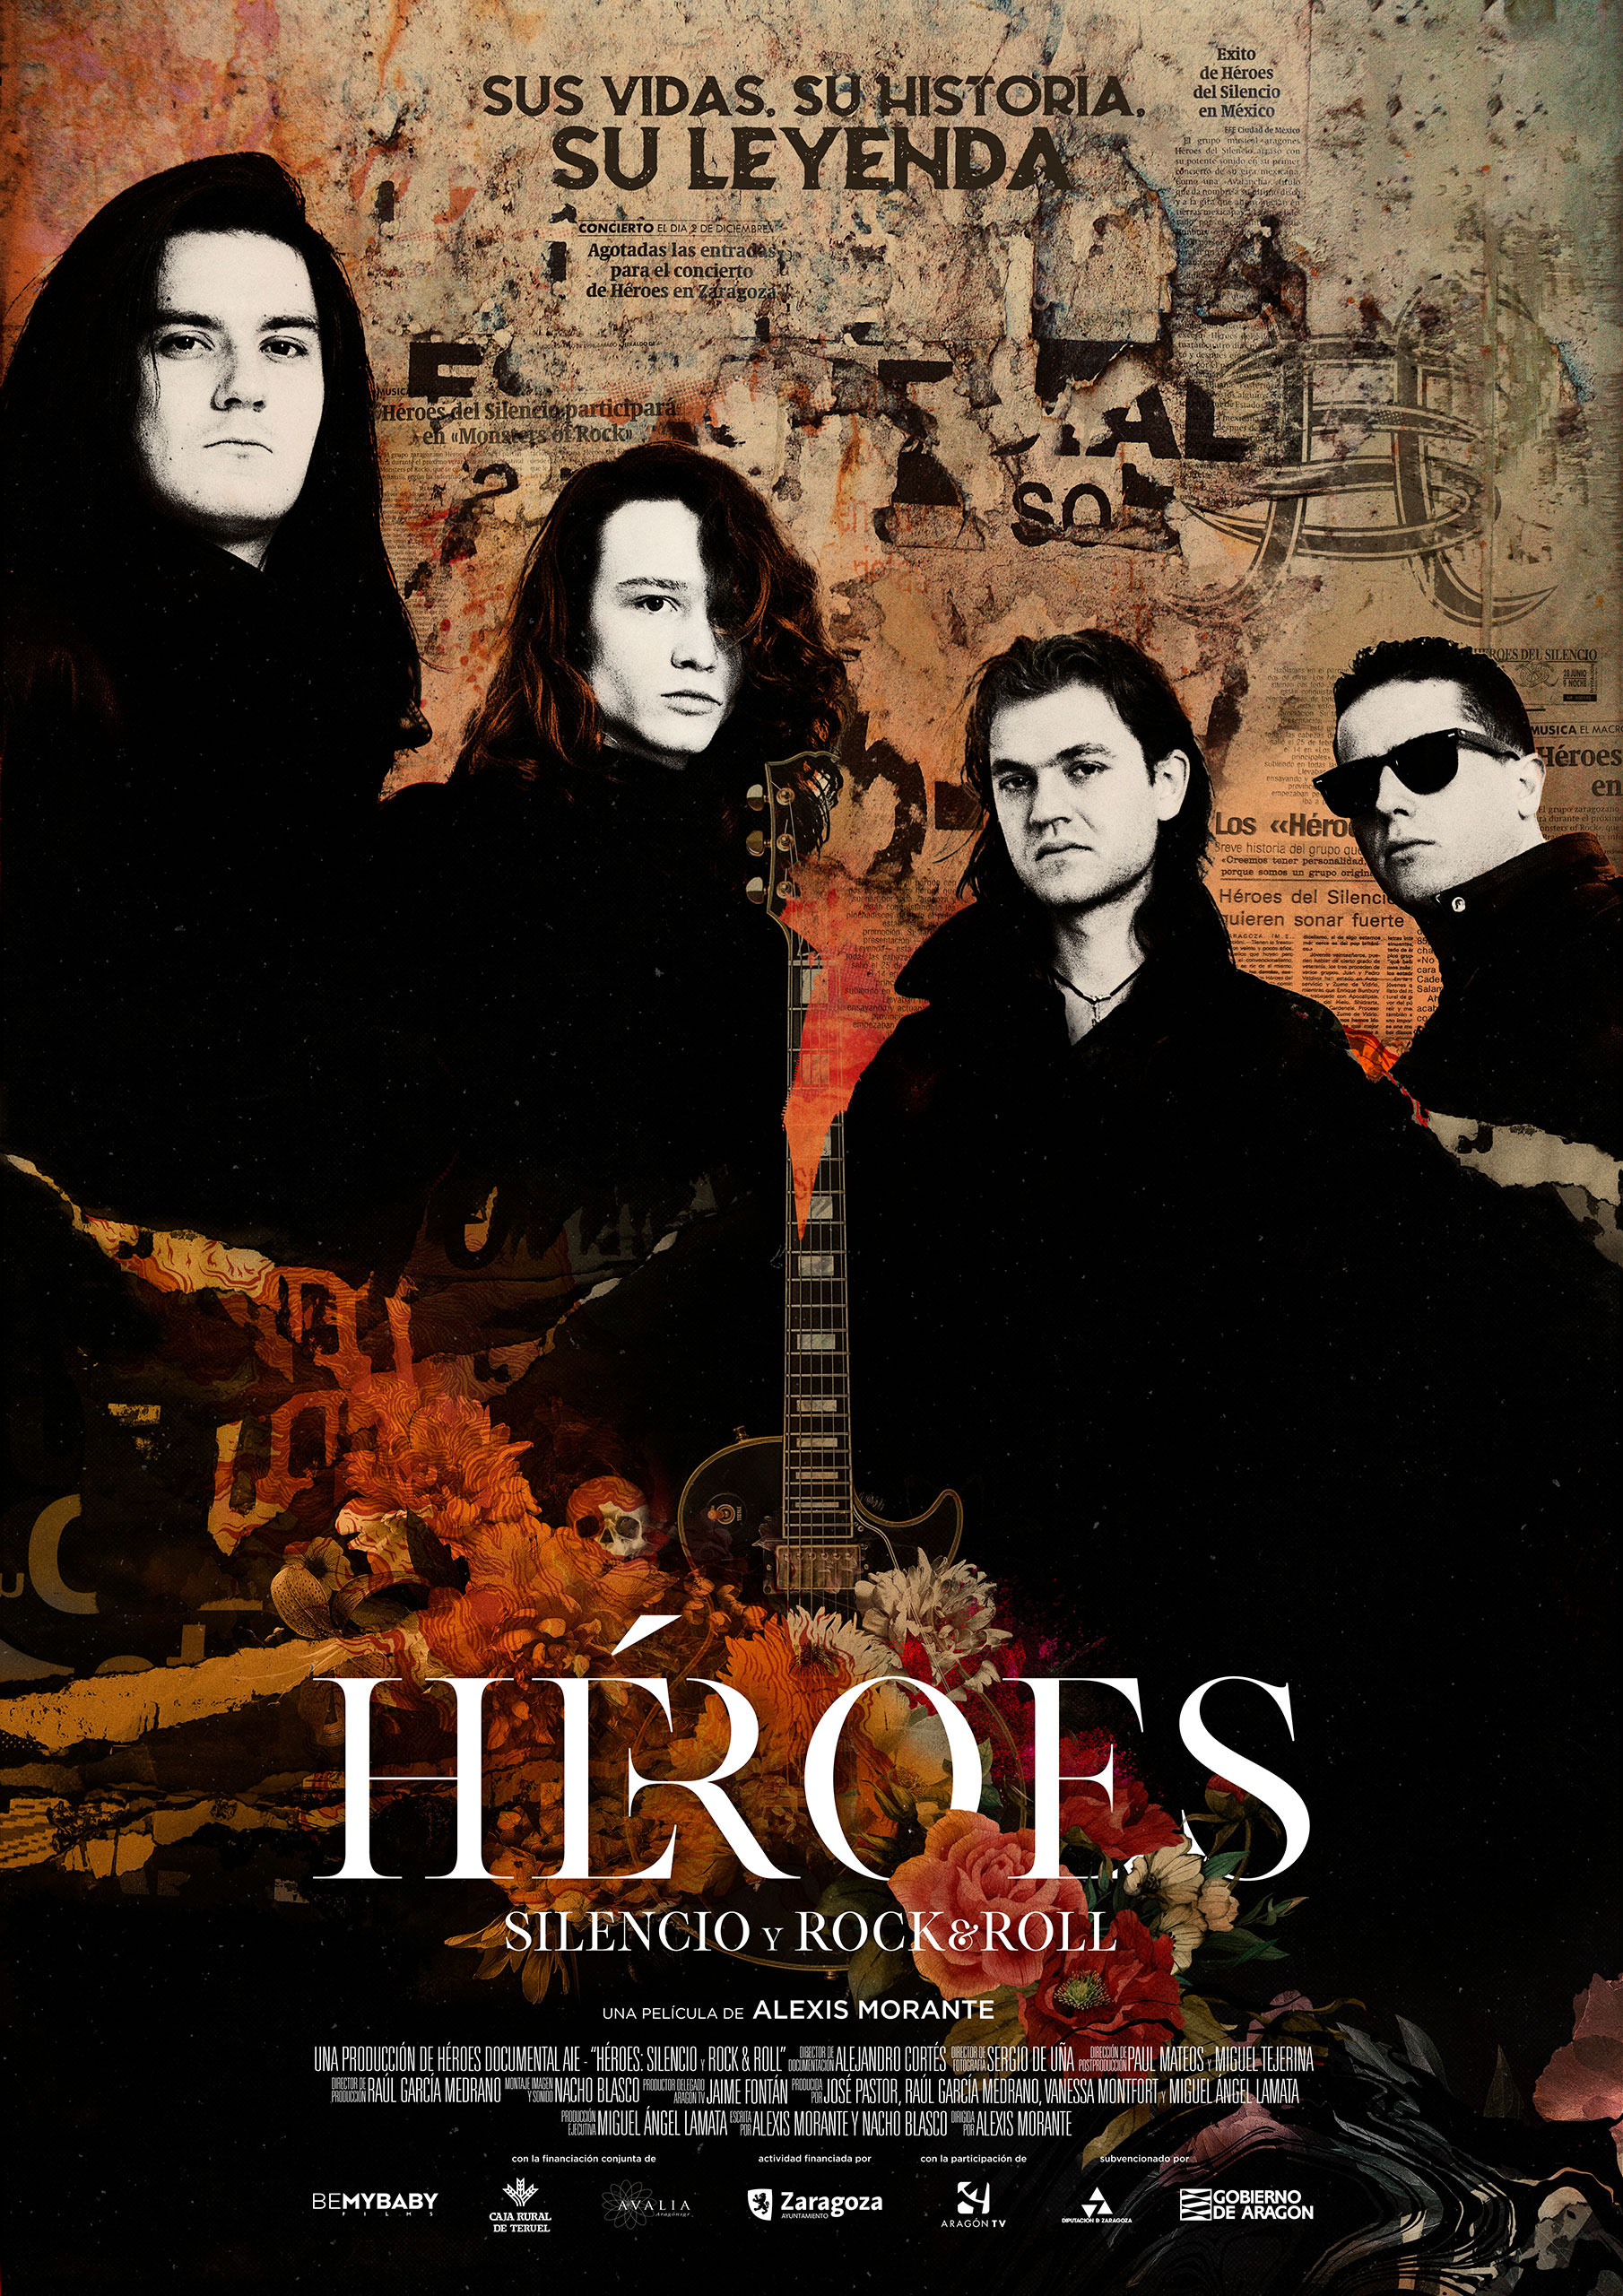 Mega Sized Movie Poster Image for Héroes. Silencio y Rock & Roll 